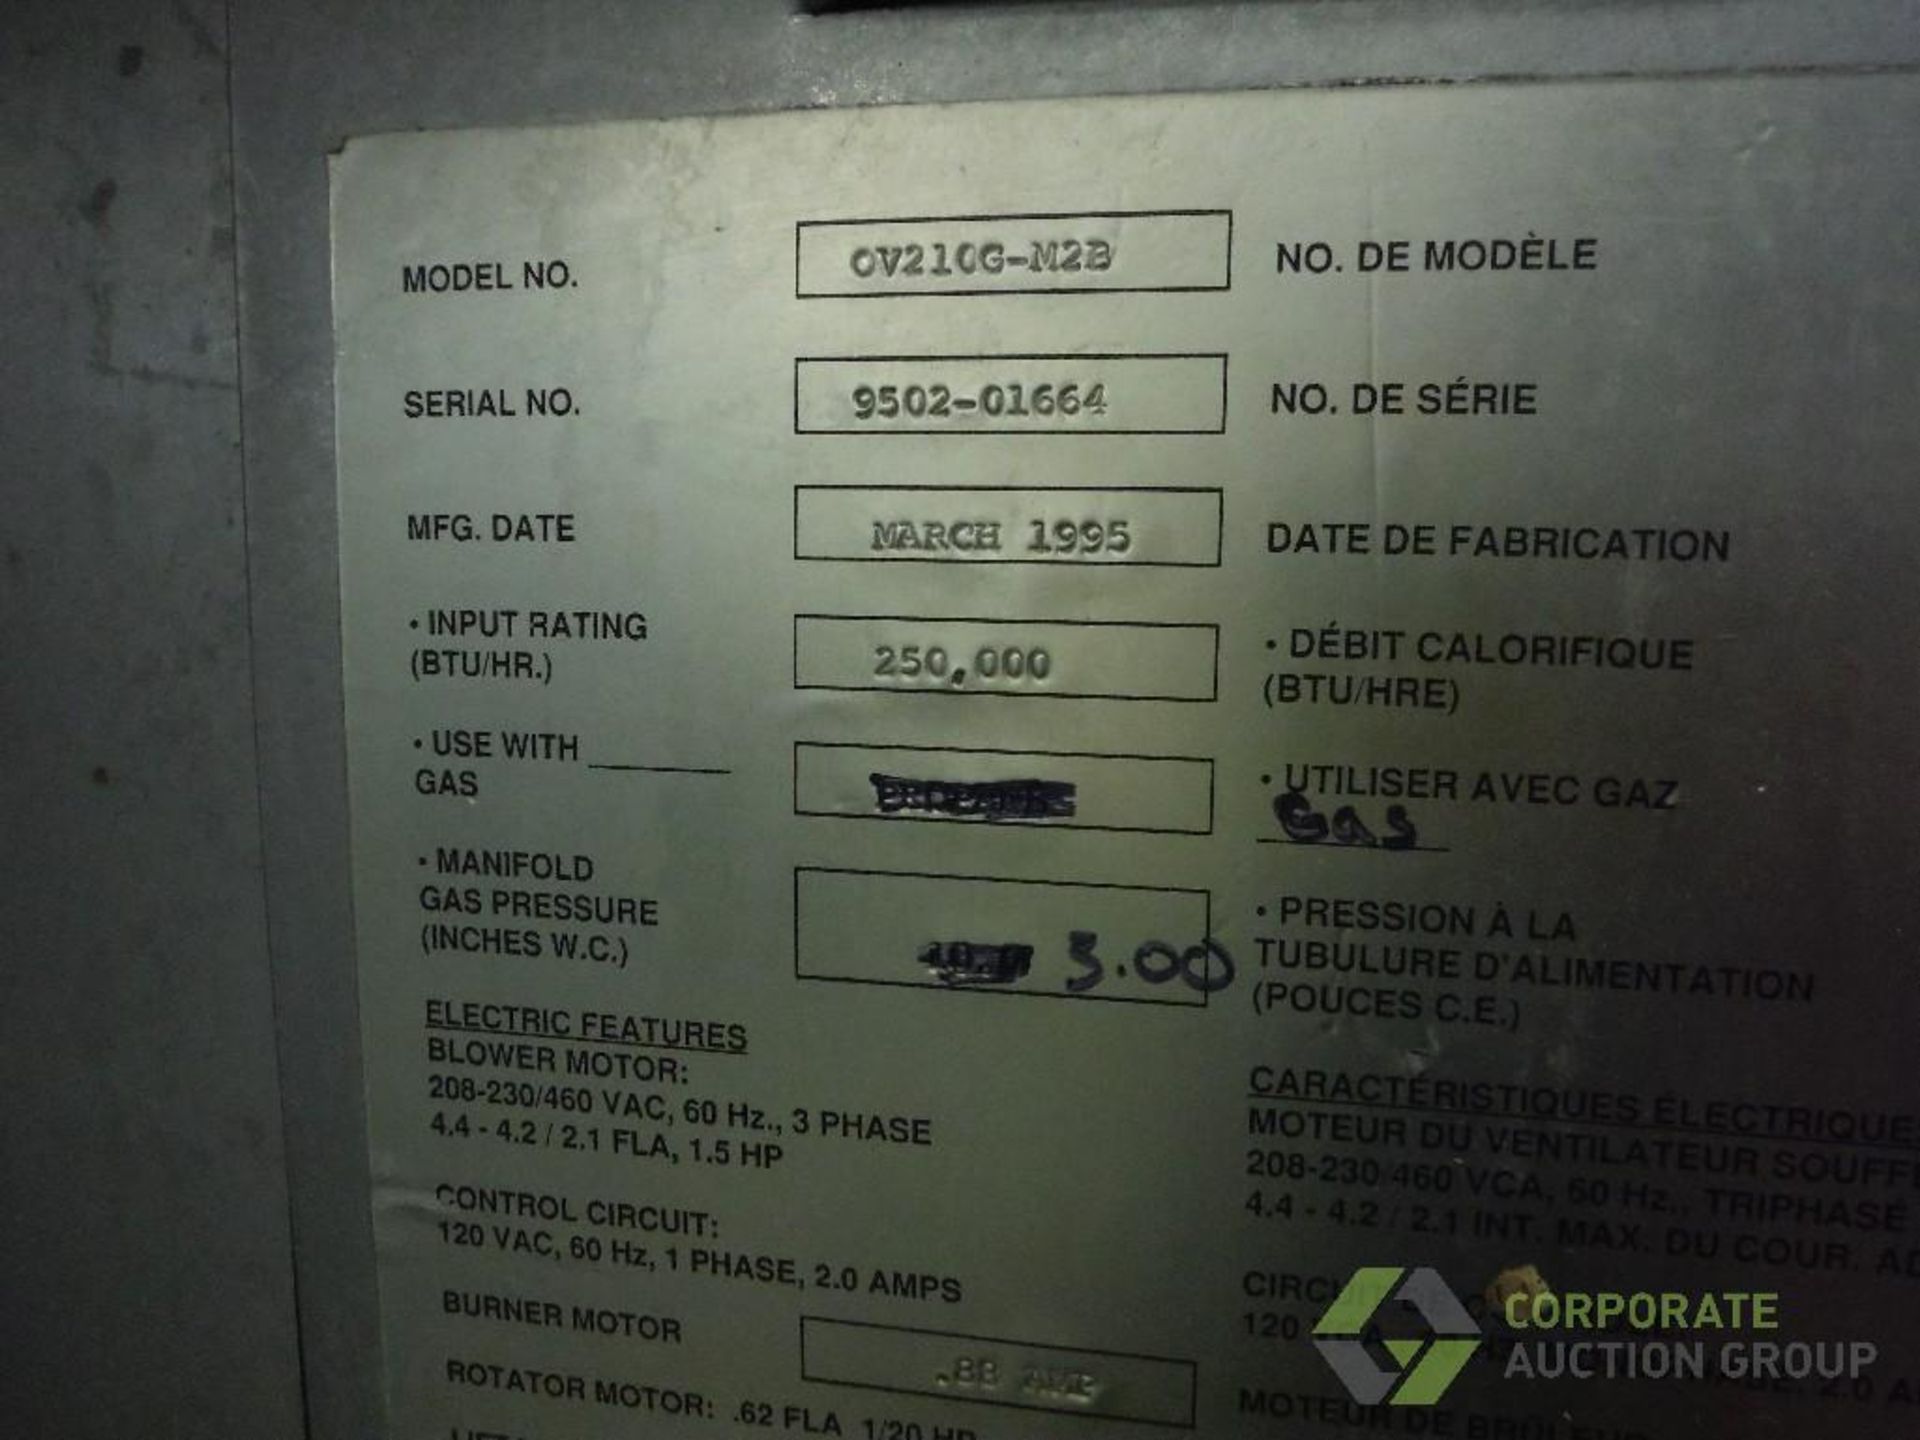 1995 Baxter double rack oven, Model OV210G-M2B, SN 9502-01664, natural gas, 250,000 btu/hr. - Image 7 of 7